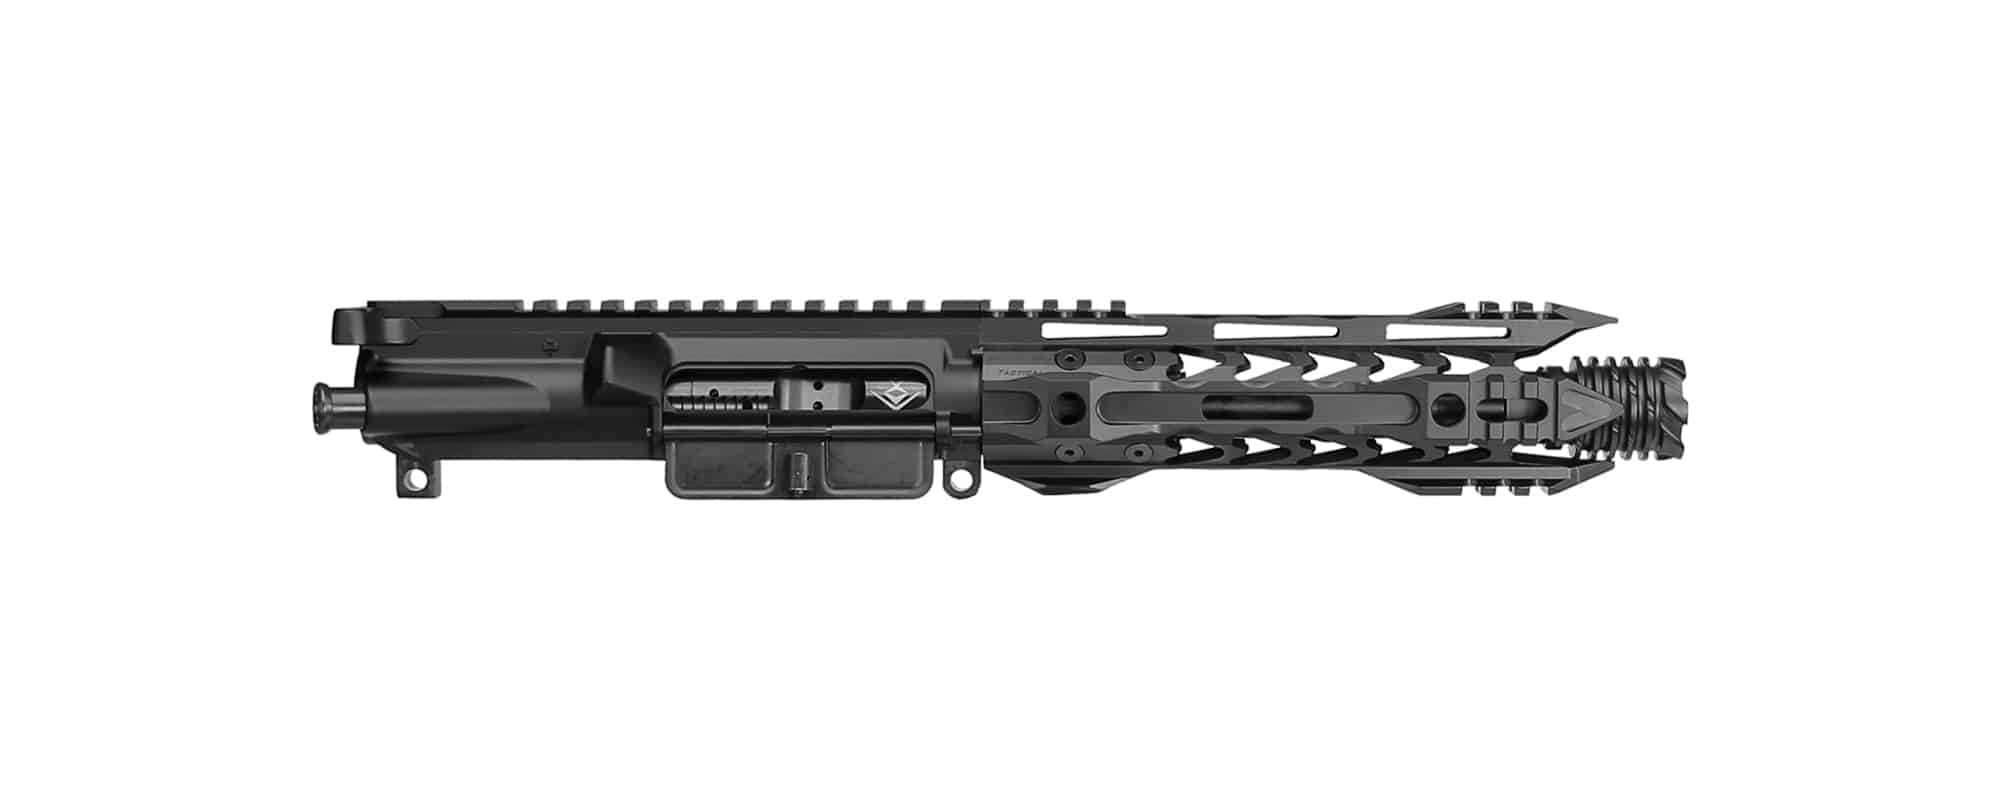 6.75" Pistol Upper W/ Javelin 7" Rail